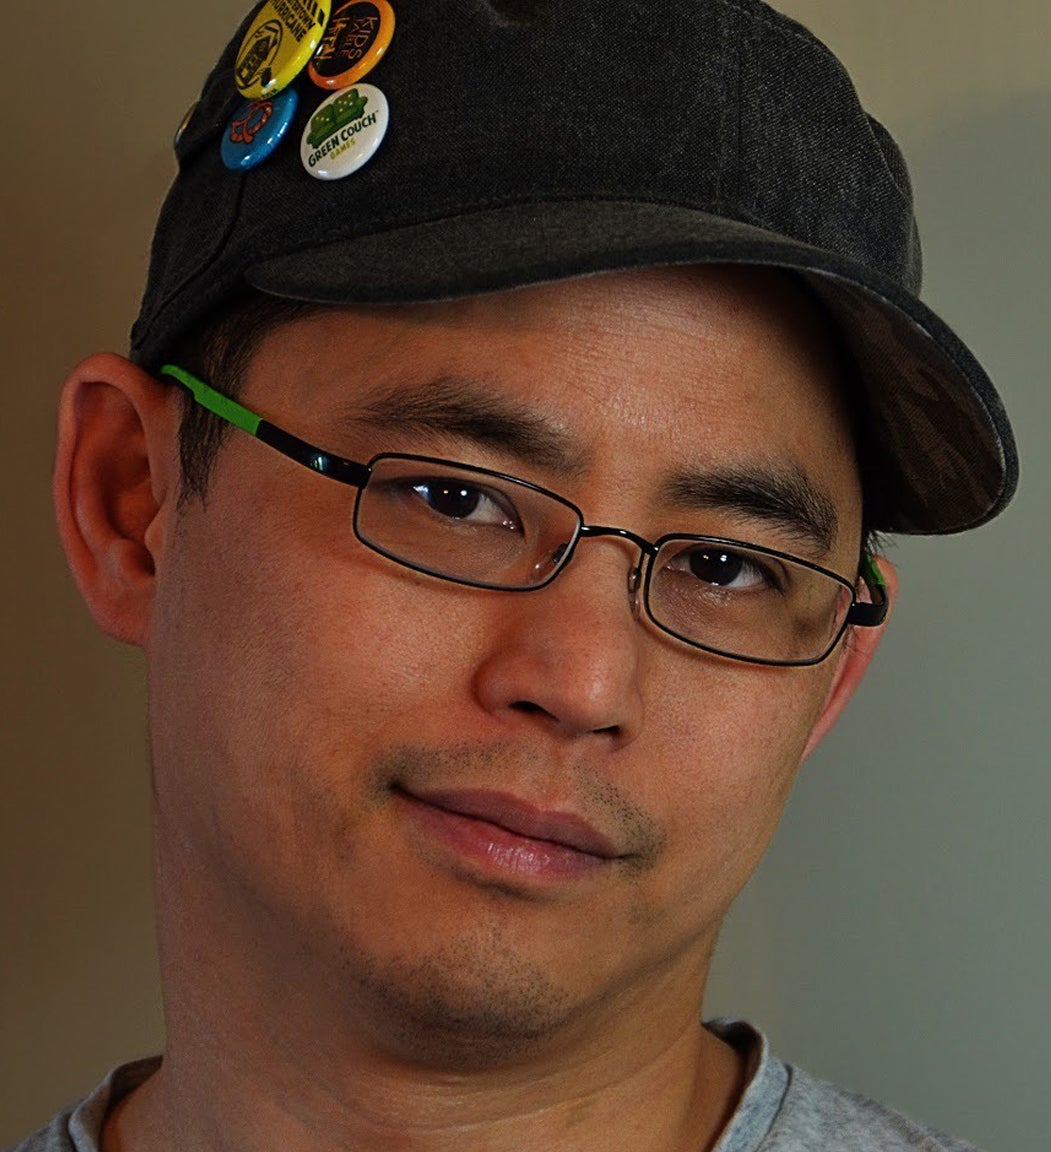 Sen-Foong Lim avatar